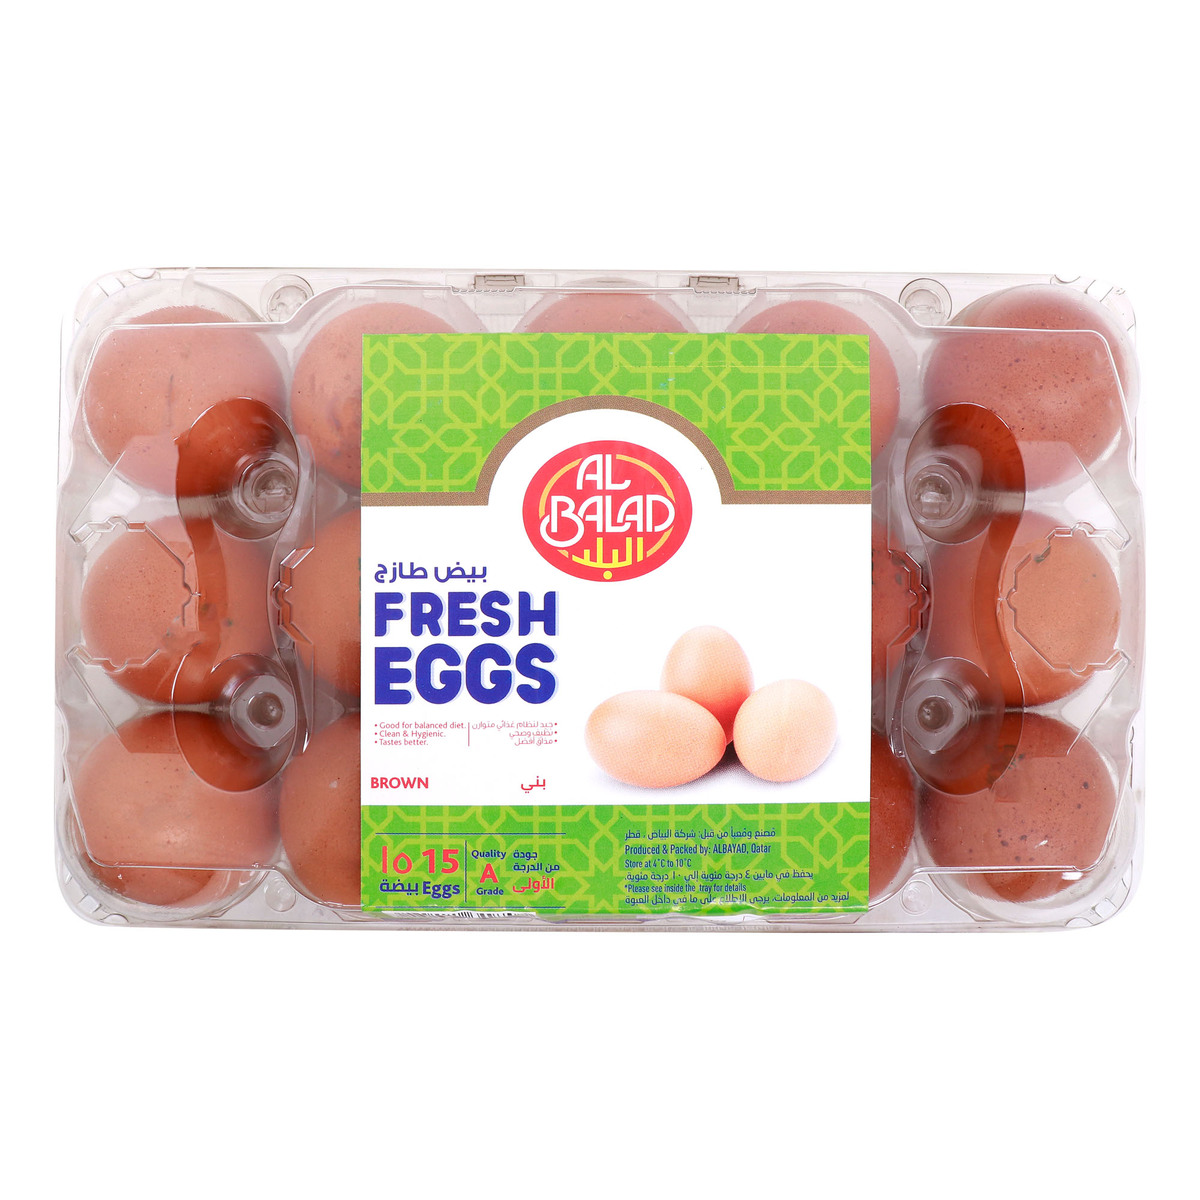 Al Balad Brown Eggs, Large, 15 pcs